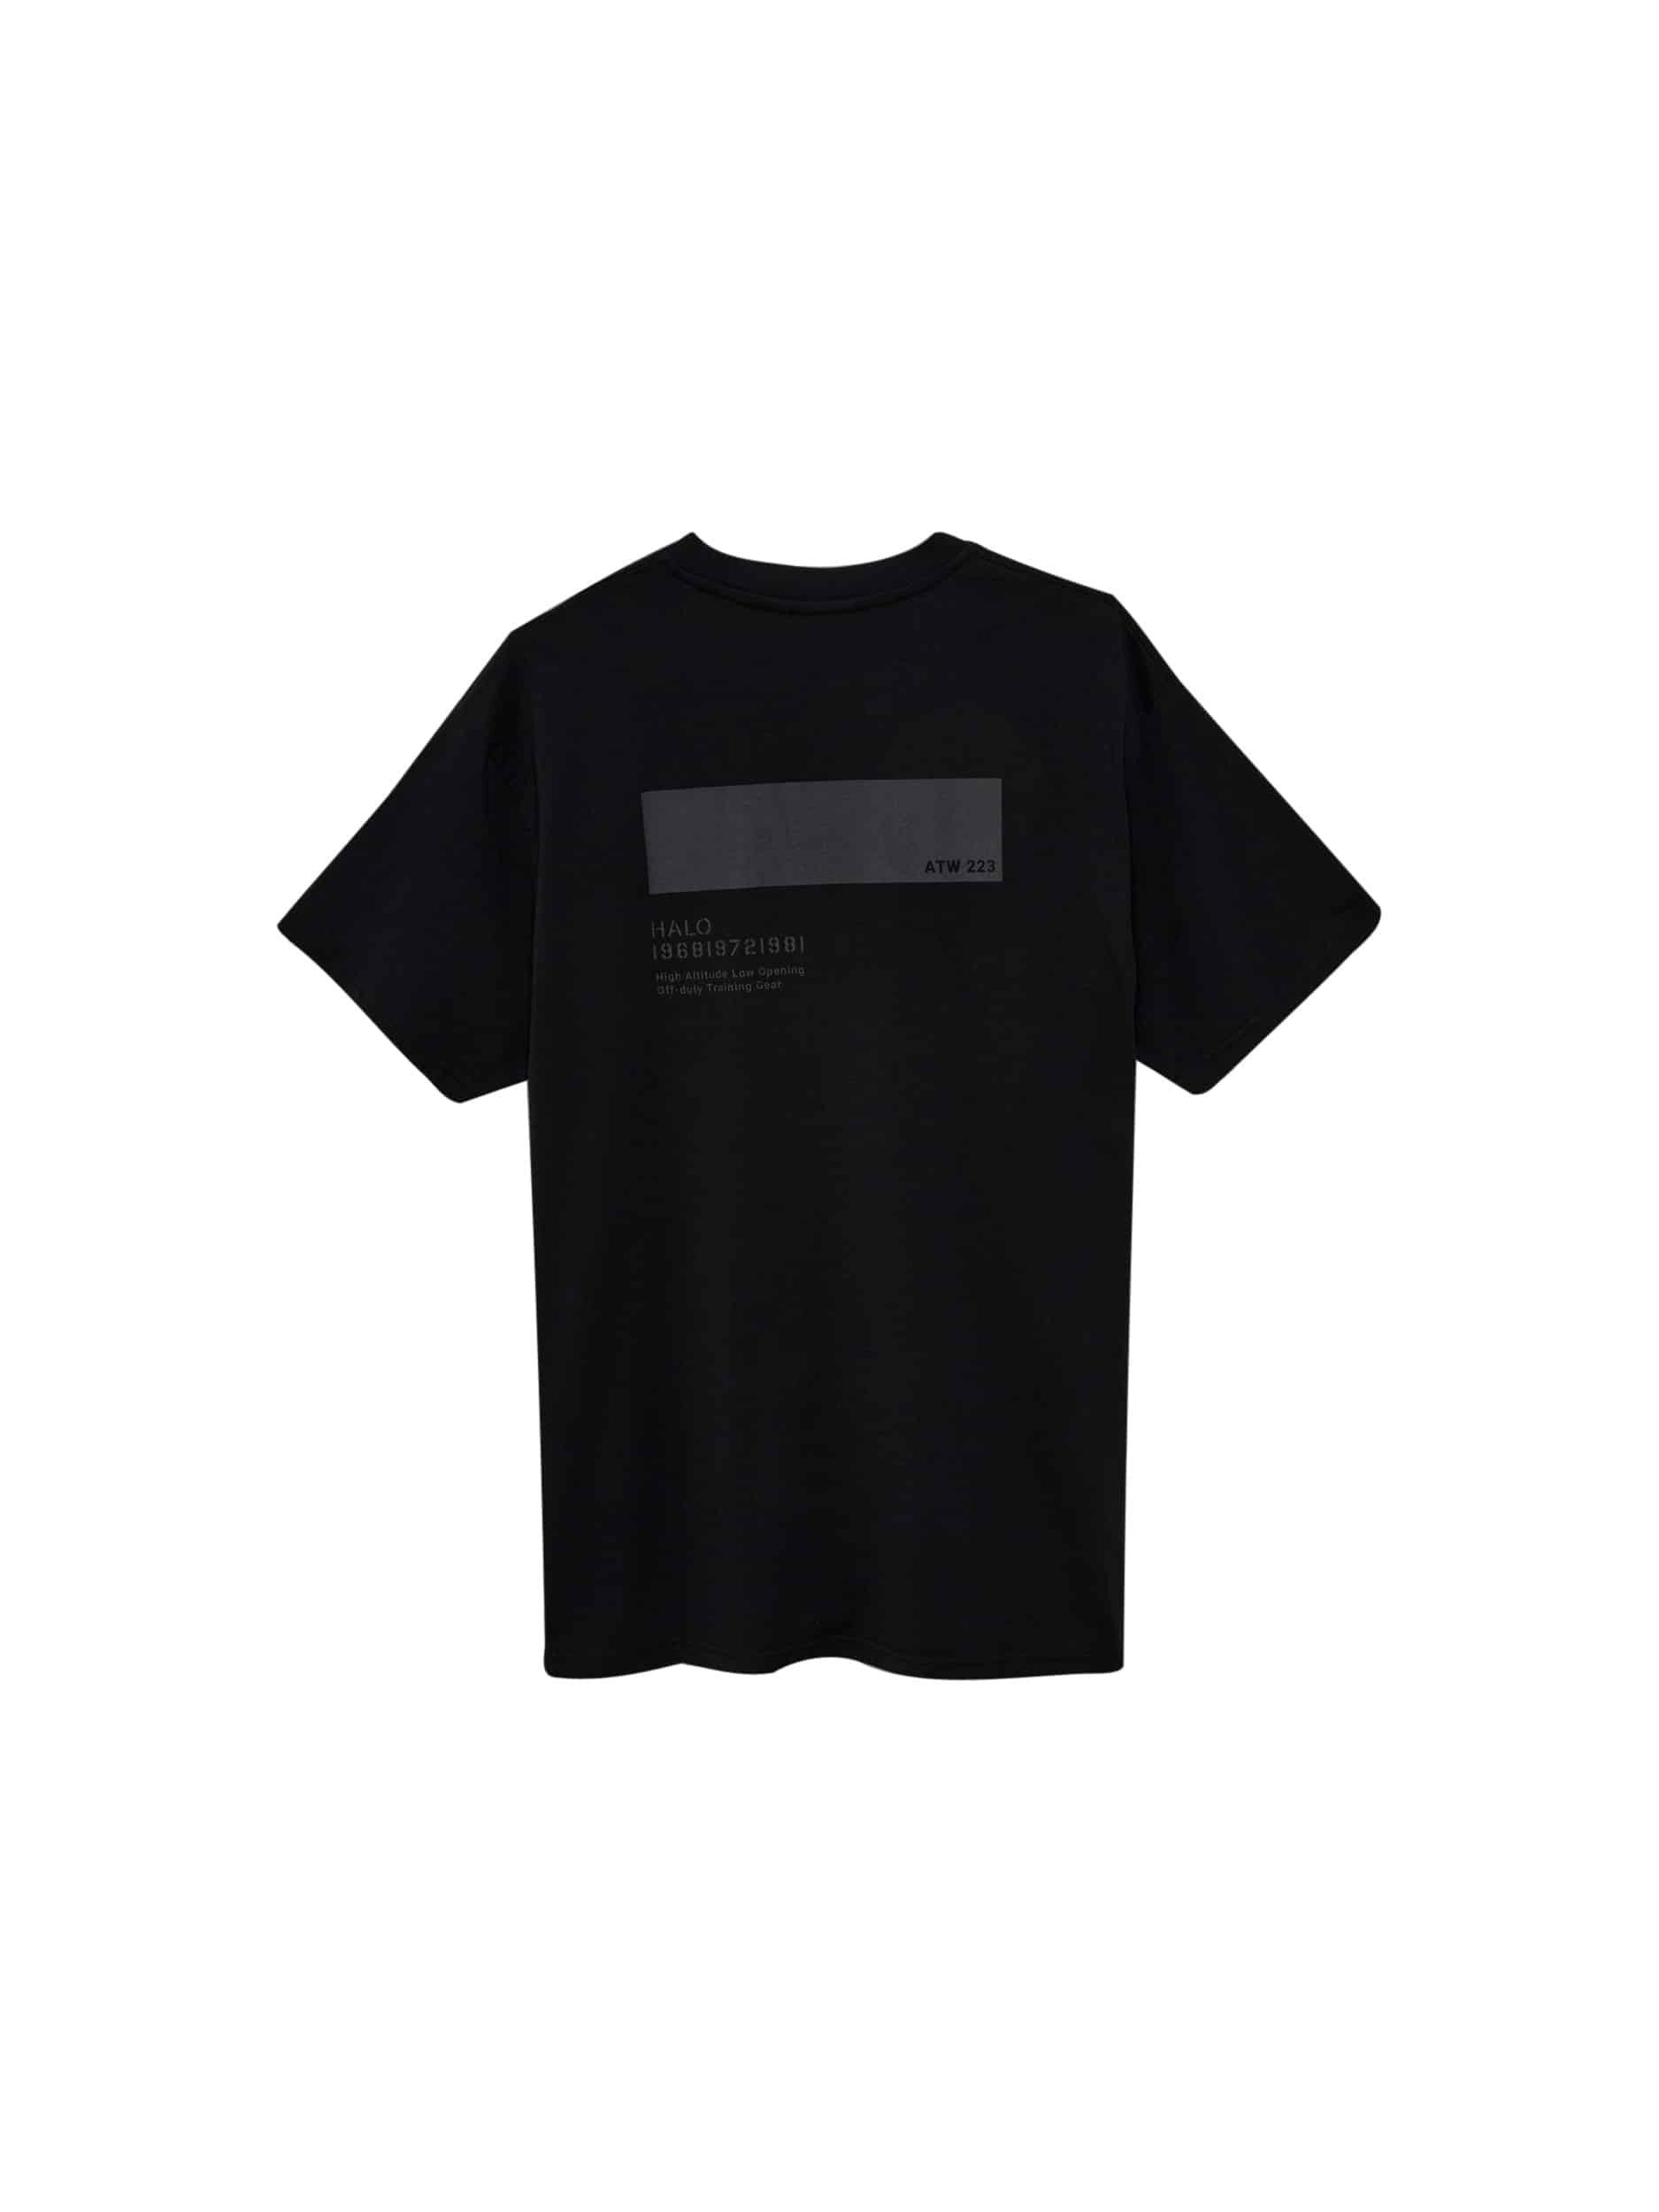 HALO Graphic T-Shirt - Black Back